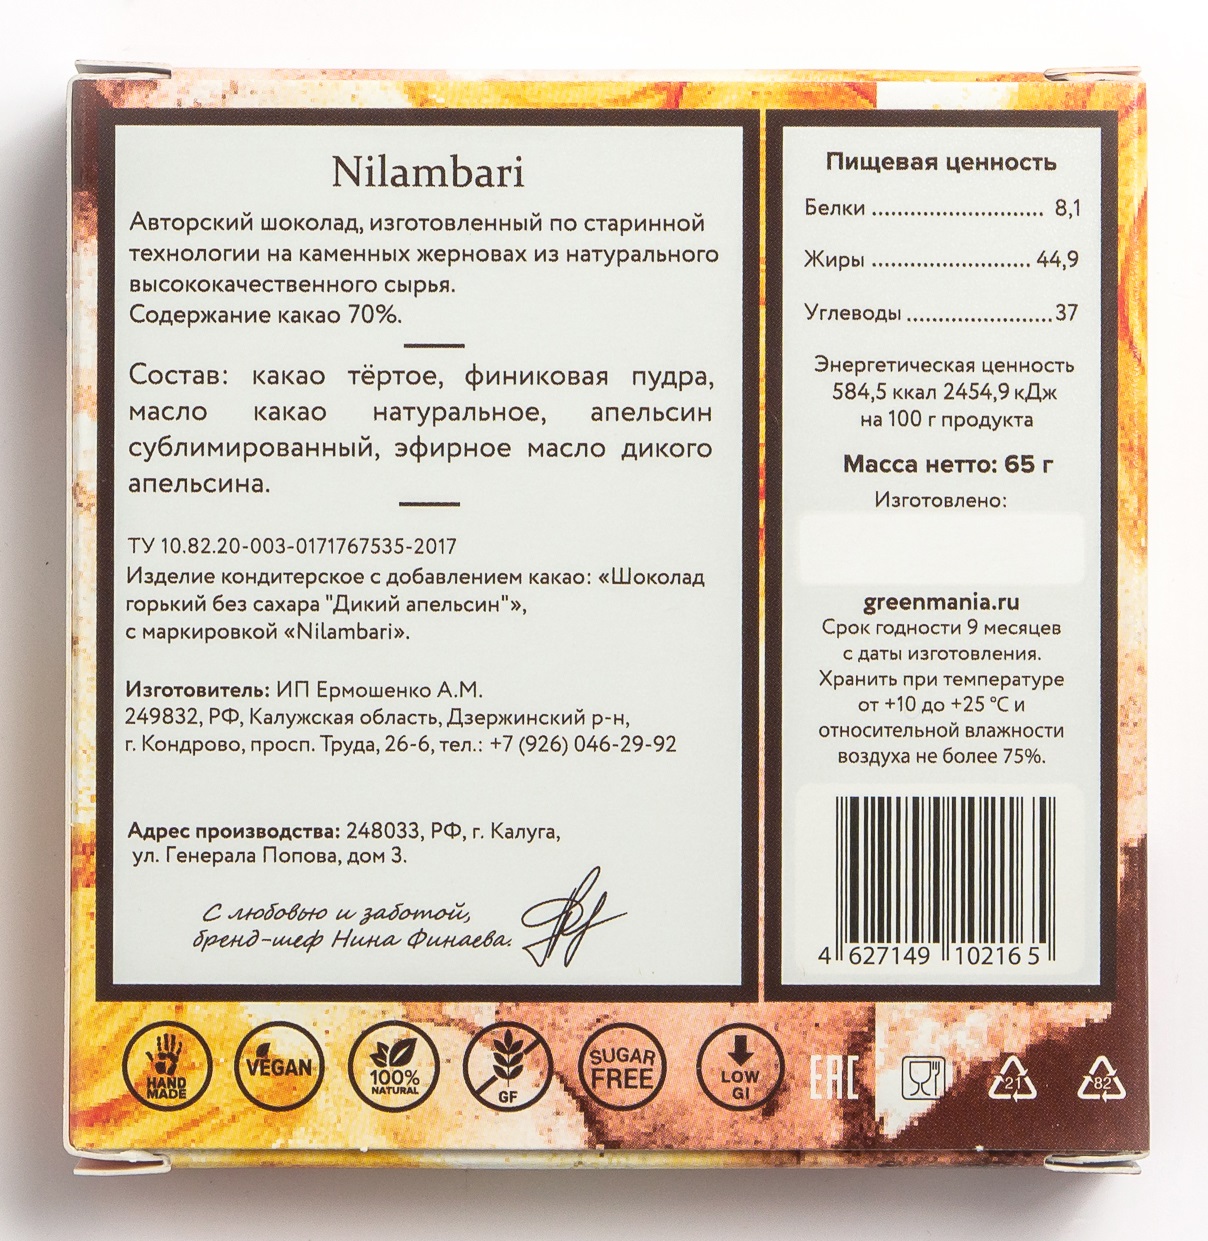 Шоколад Nilambari горький без сахара Дикий апельсин, 65 г